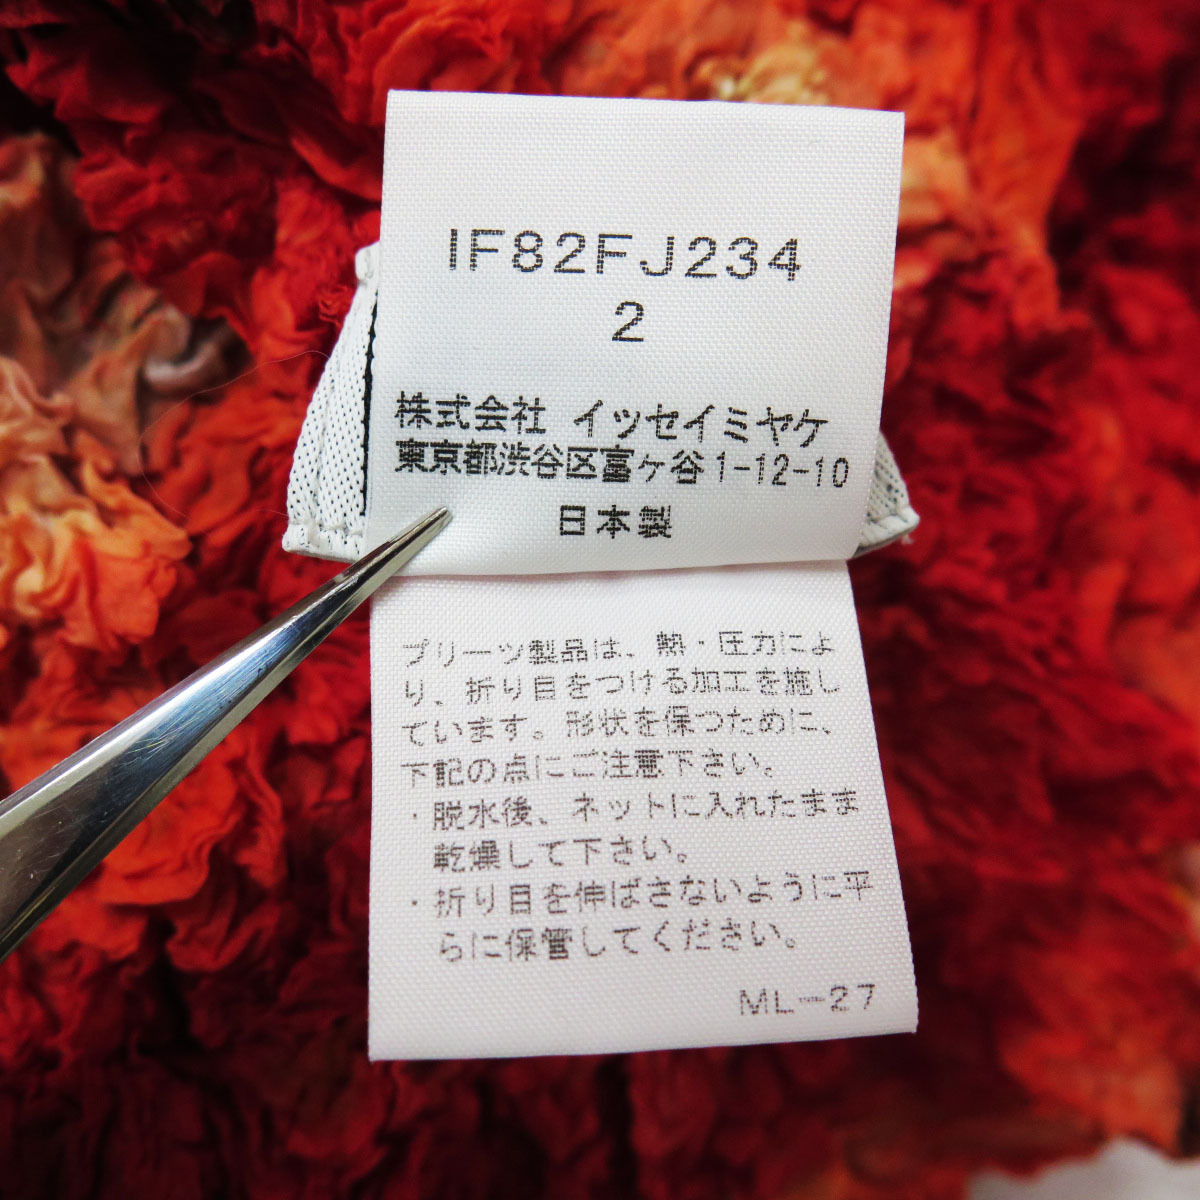 2008 ISSEY MIYAKE FETE TOMATO PLEATS SHIRT イッセイミヤケ フェット トマト プリーツ シャツ プリーツプリーズ の画像9